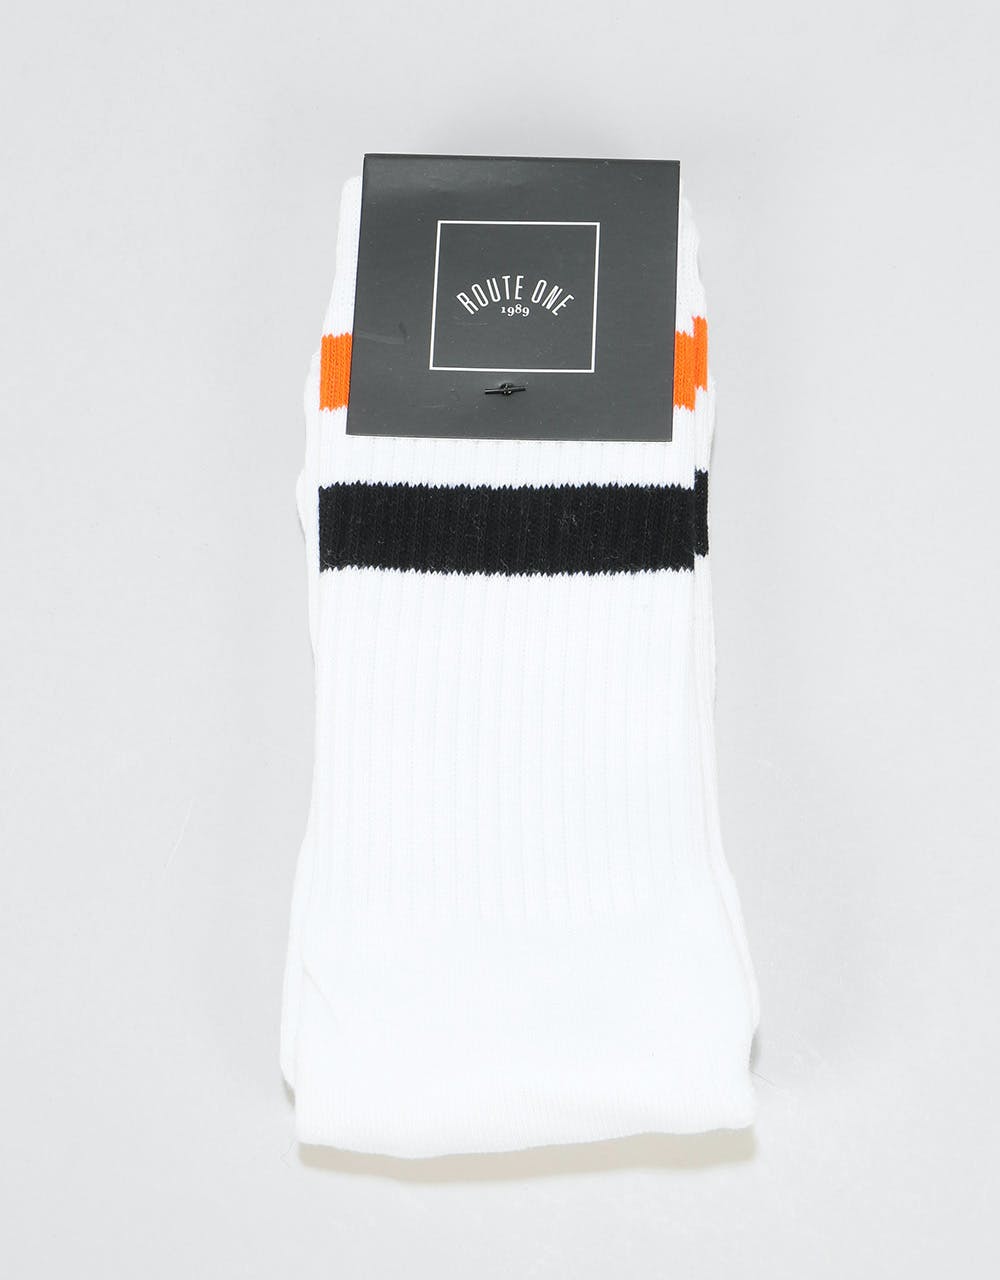 Route One Classic Crew Socks - White/Orange/Black